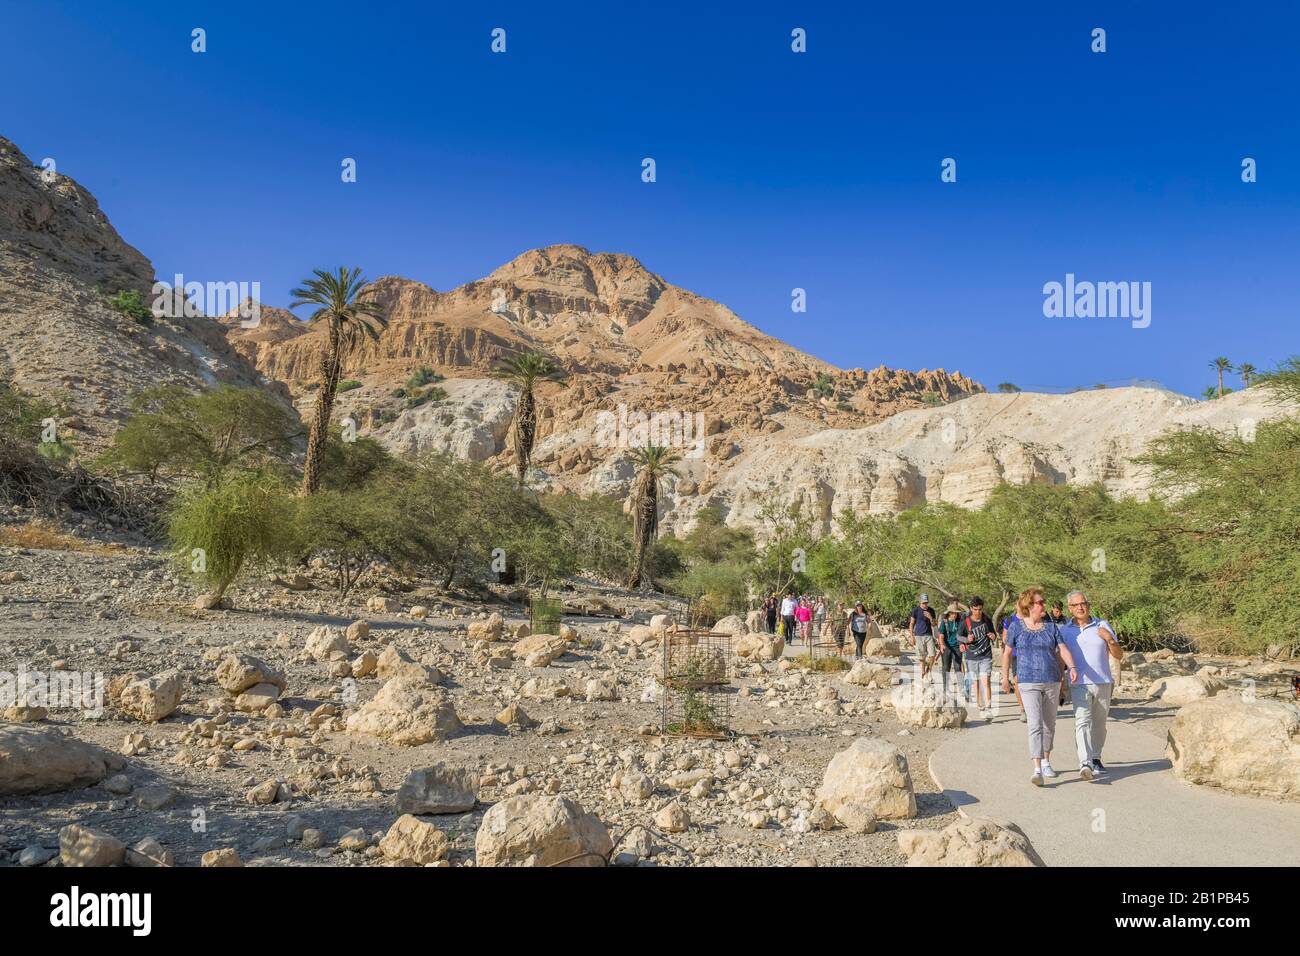 Wanderer im Wadi David, Naturreservat Ein Gedi, Israel Stock Photo